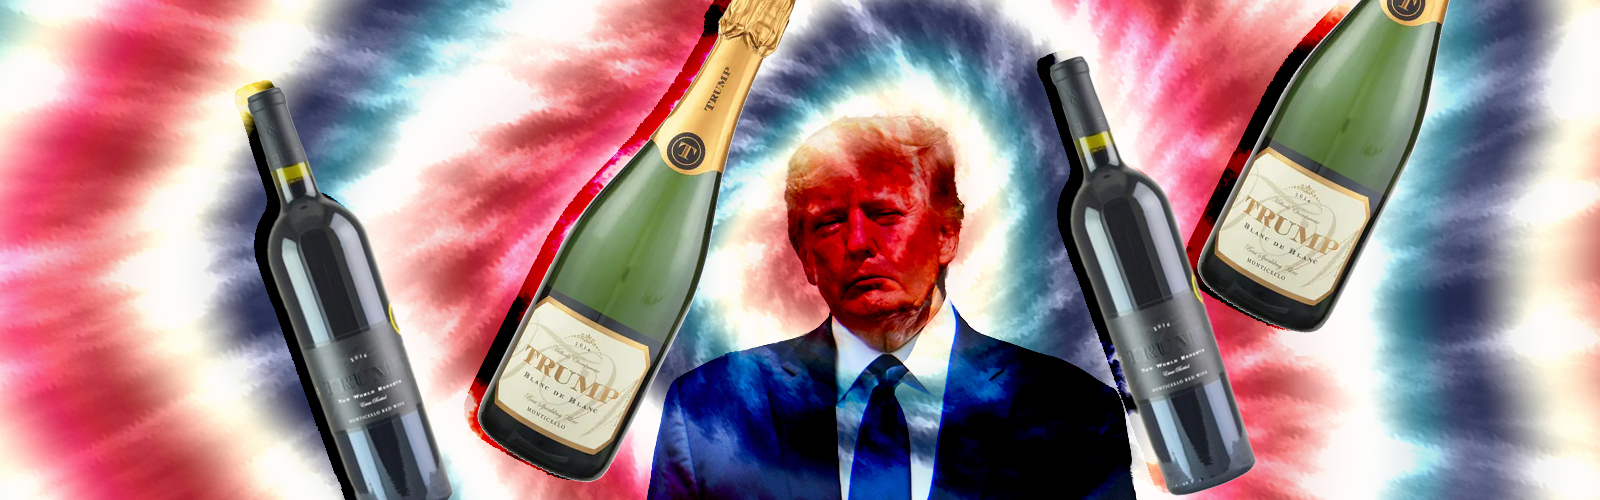 Trump Wines